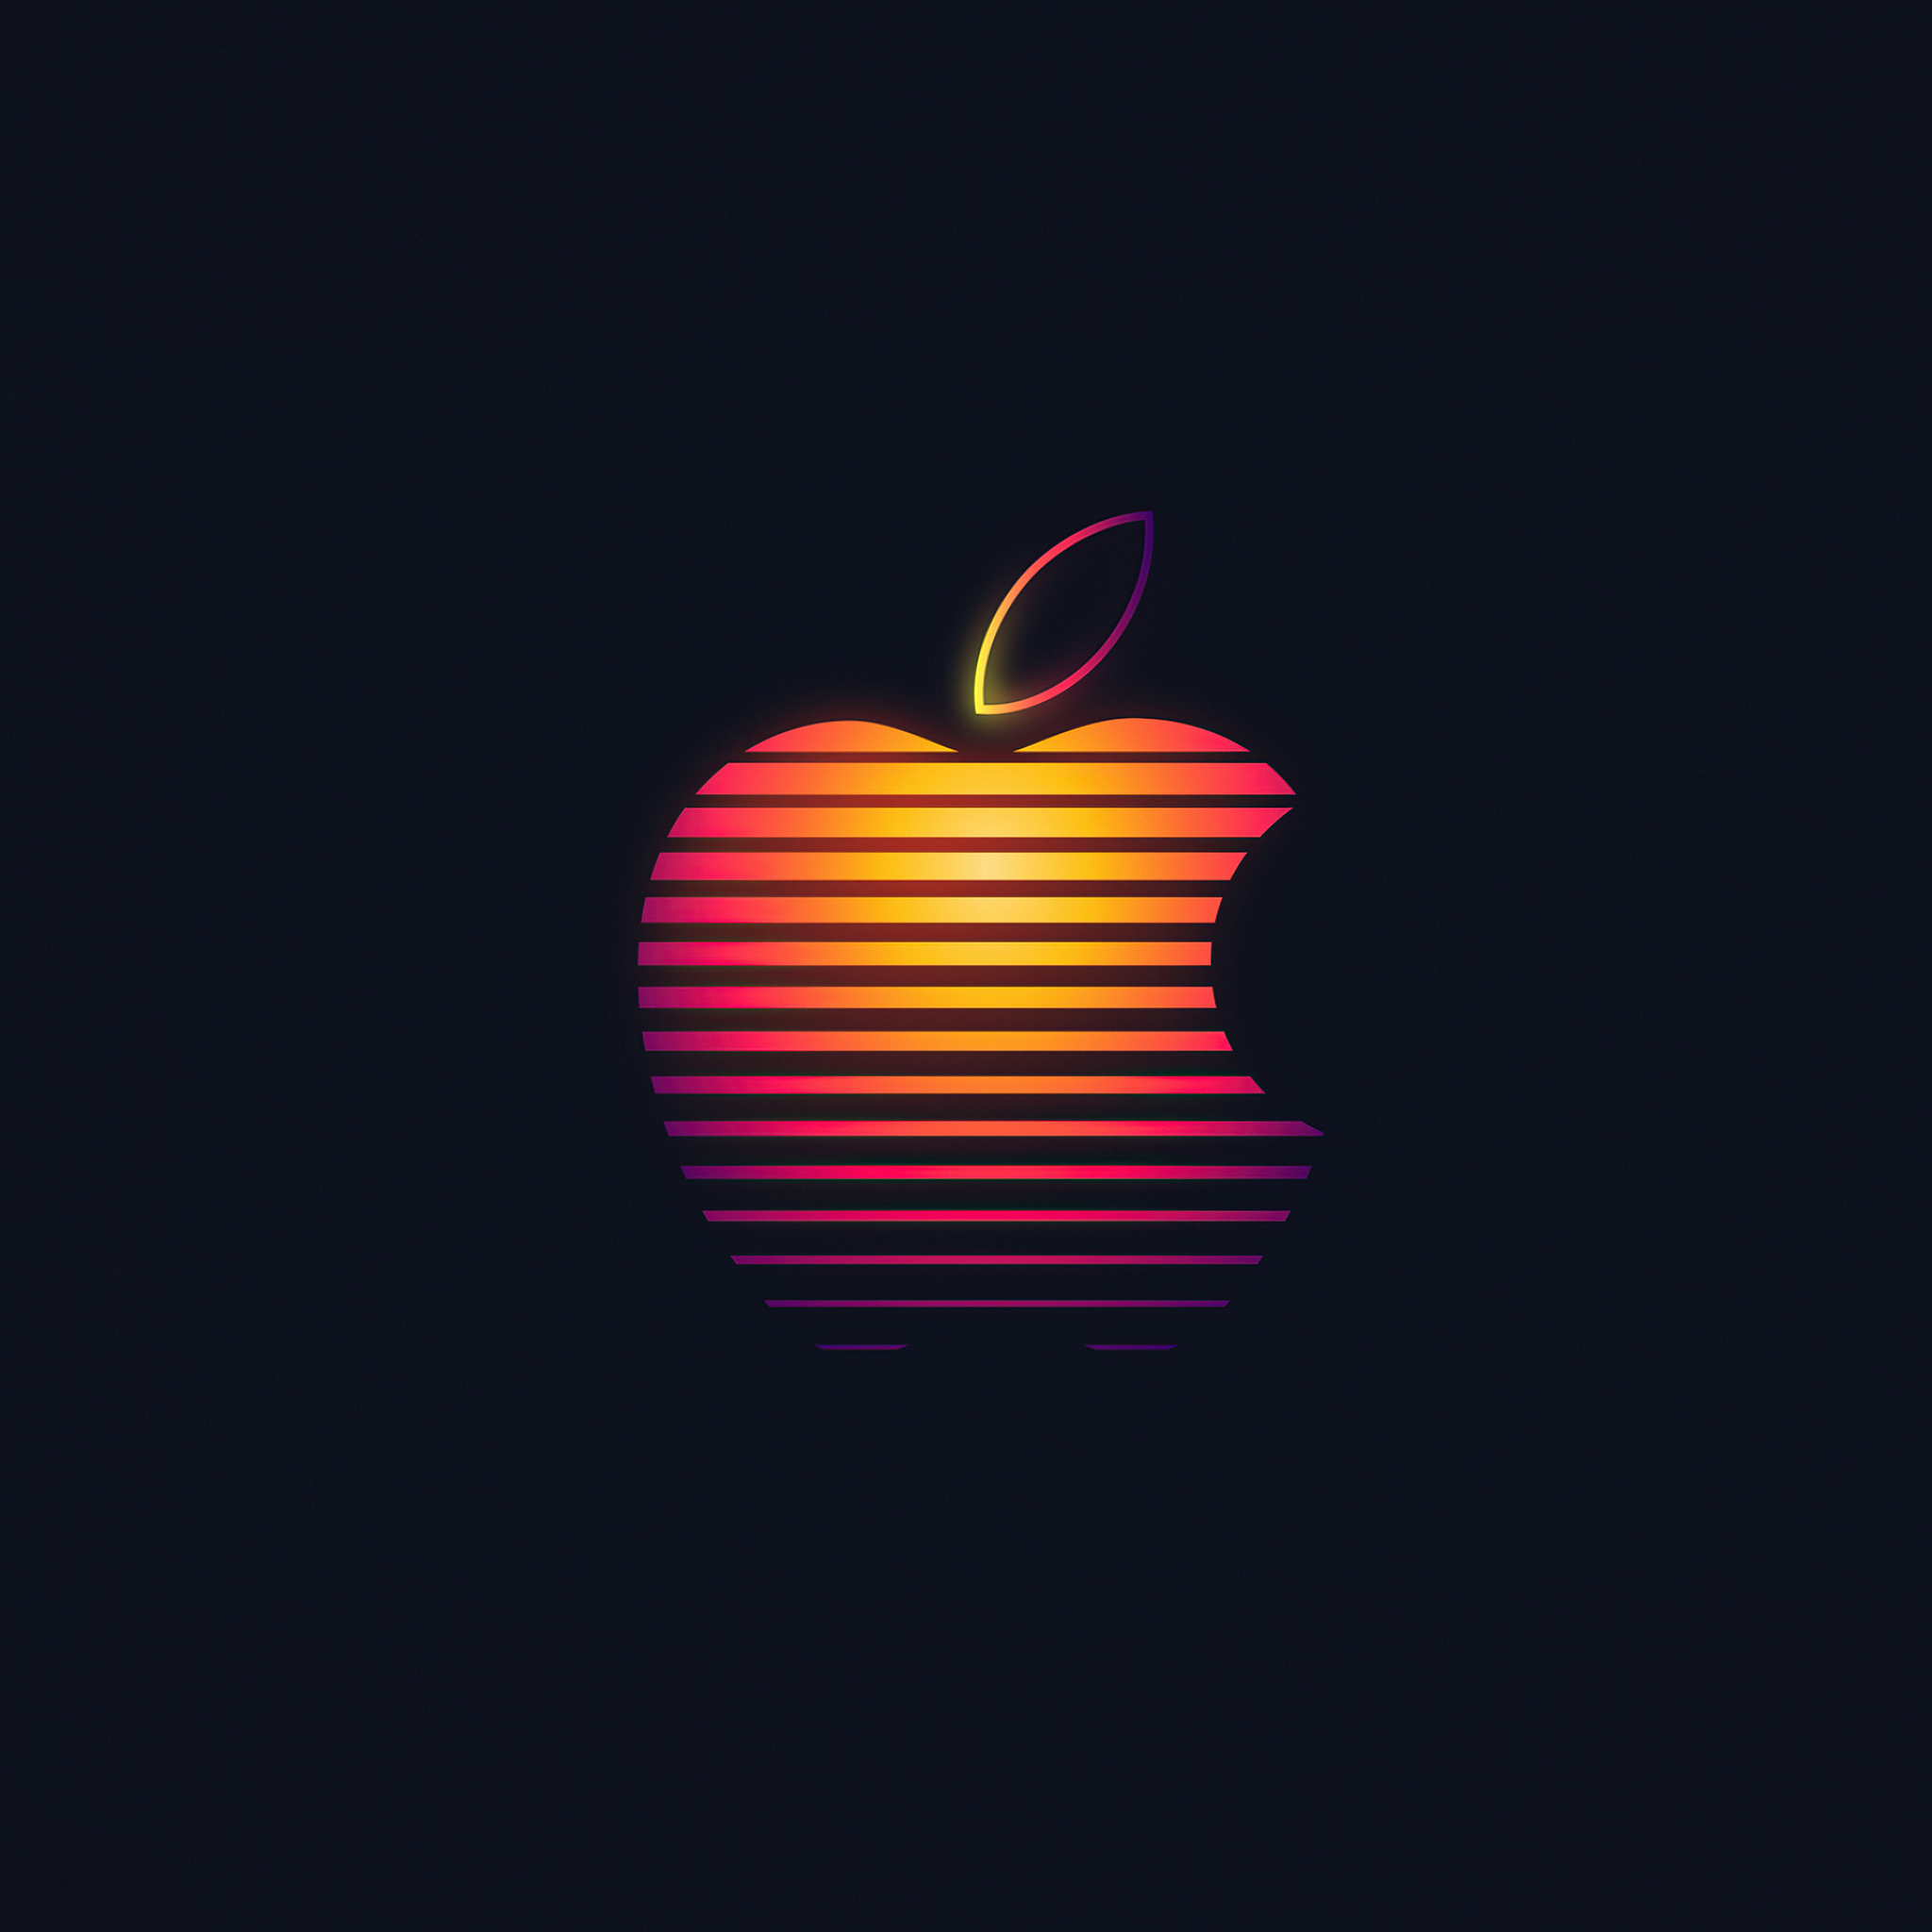 2048x2048 Apple Glowing Logo 4k Ipad Air ,HD 4k Wallpapers,Images ...